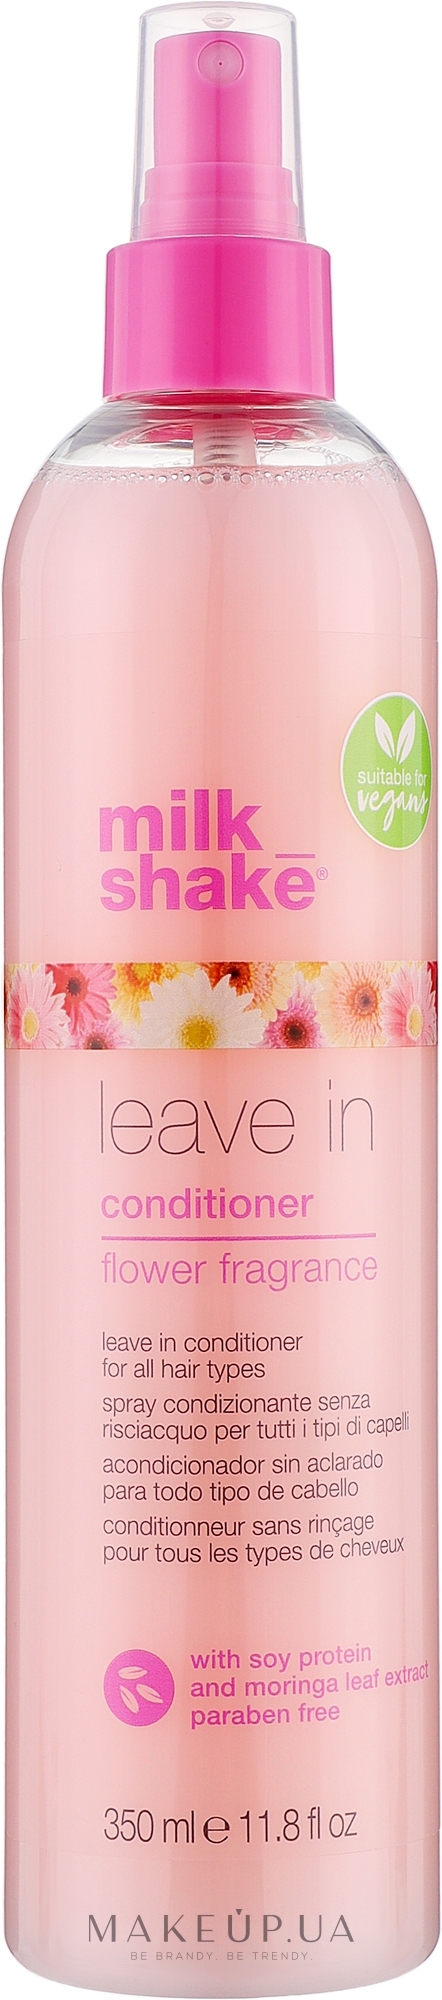 Несмываемый кондиционер для волос - Milk_Shake Leave in Conditioner Flower Fragrance — фото 350ml